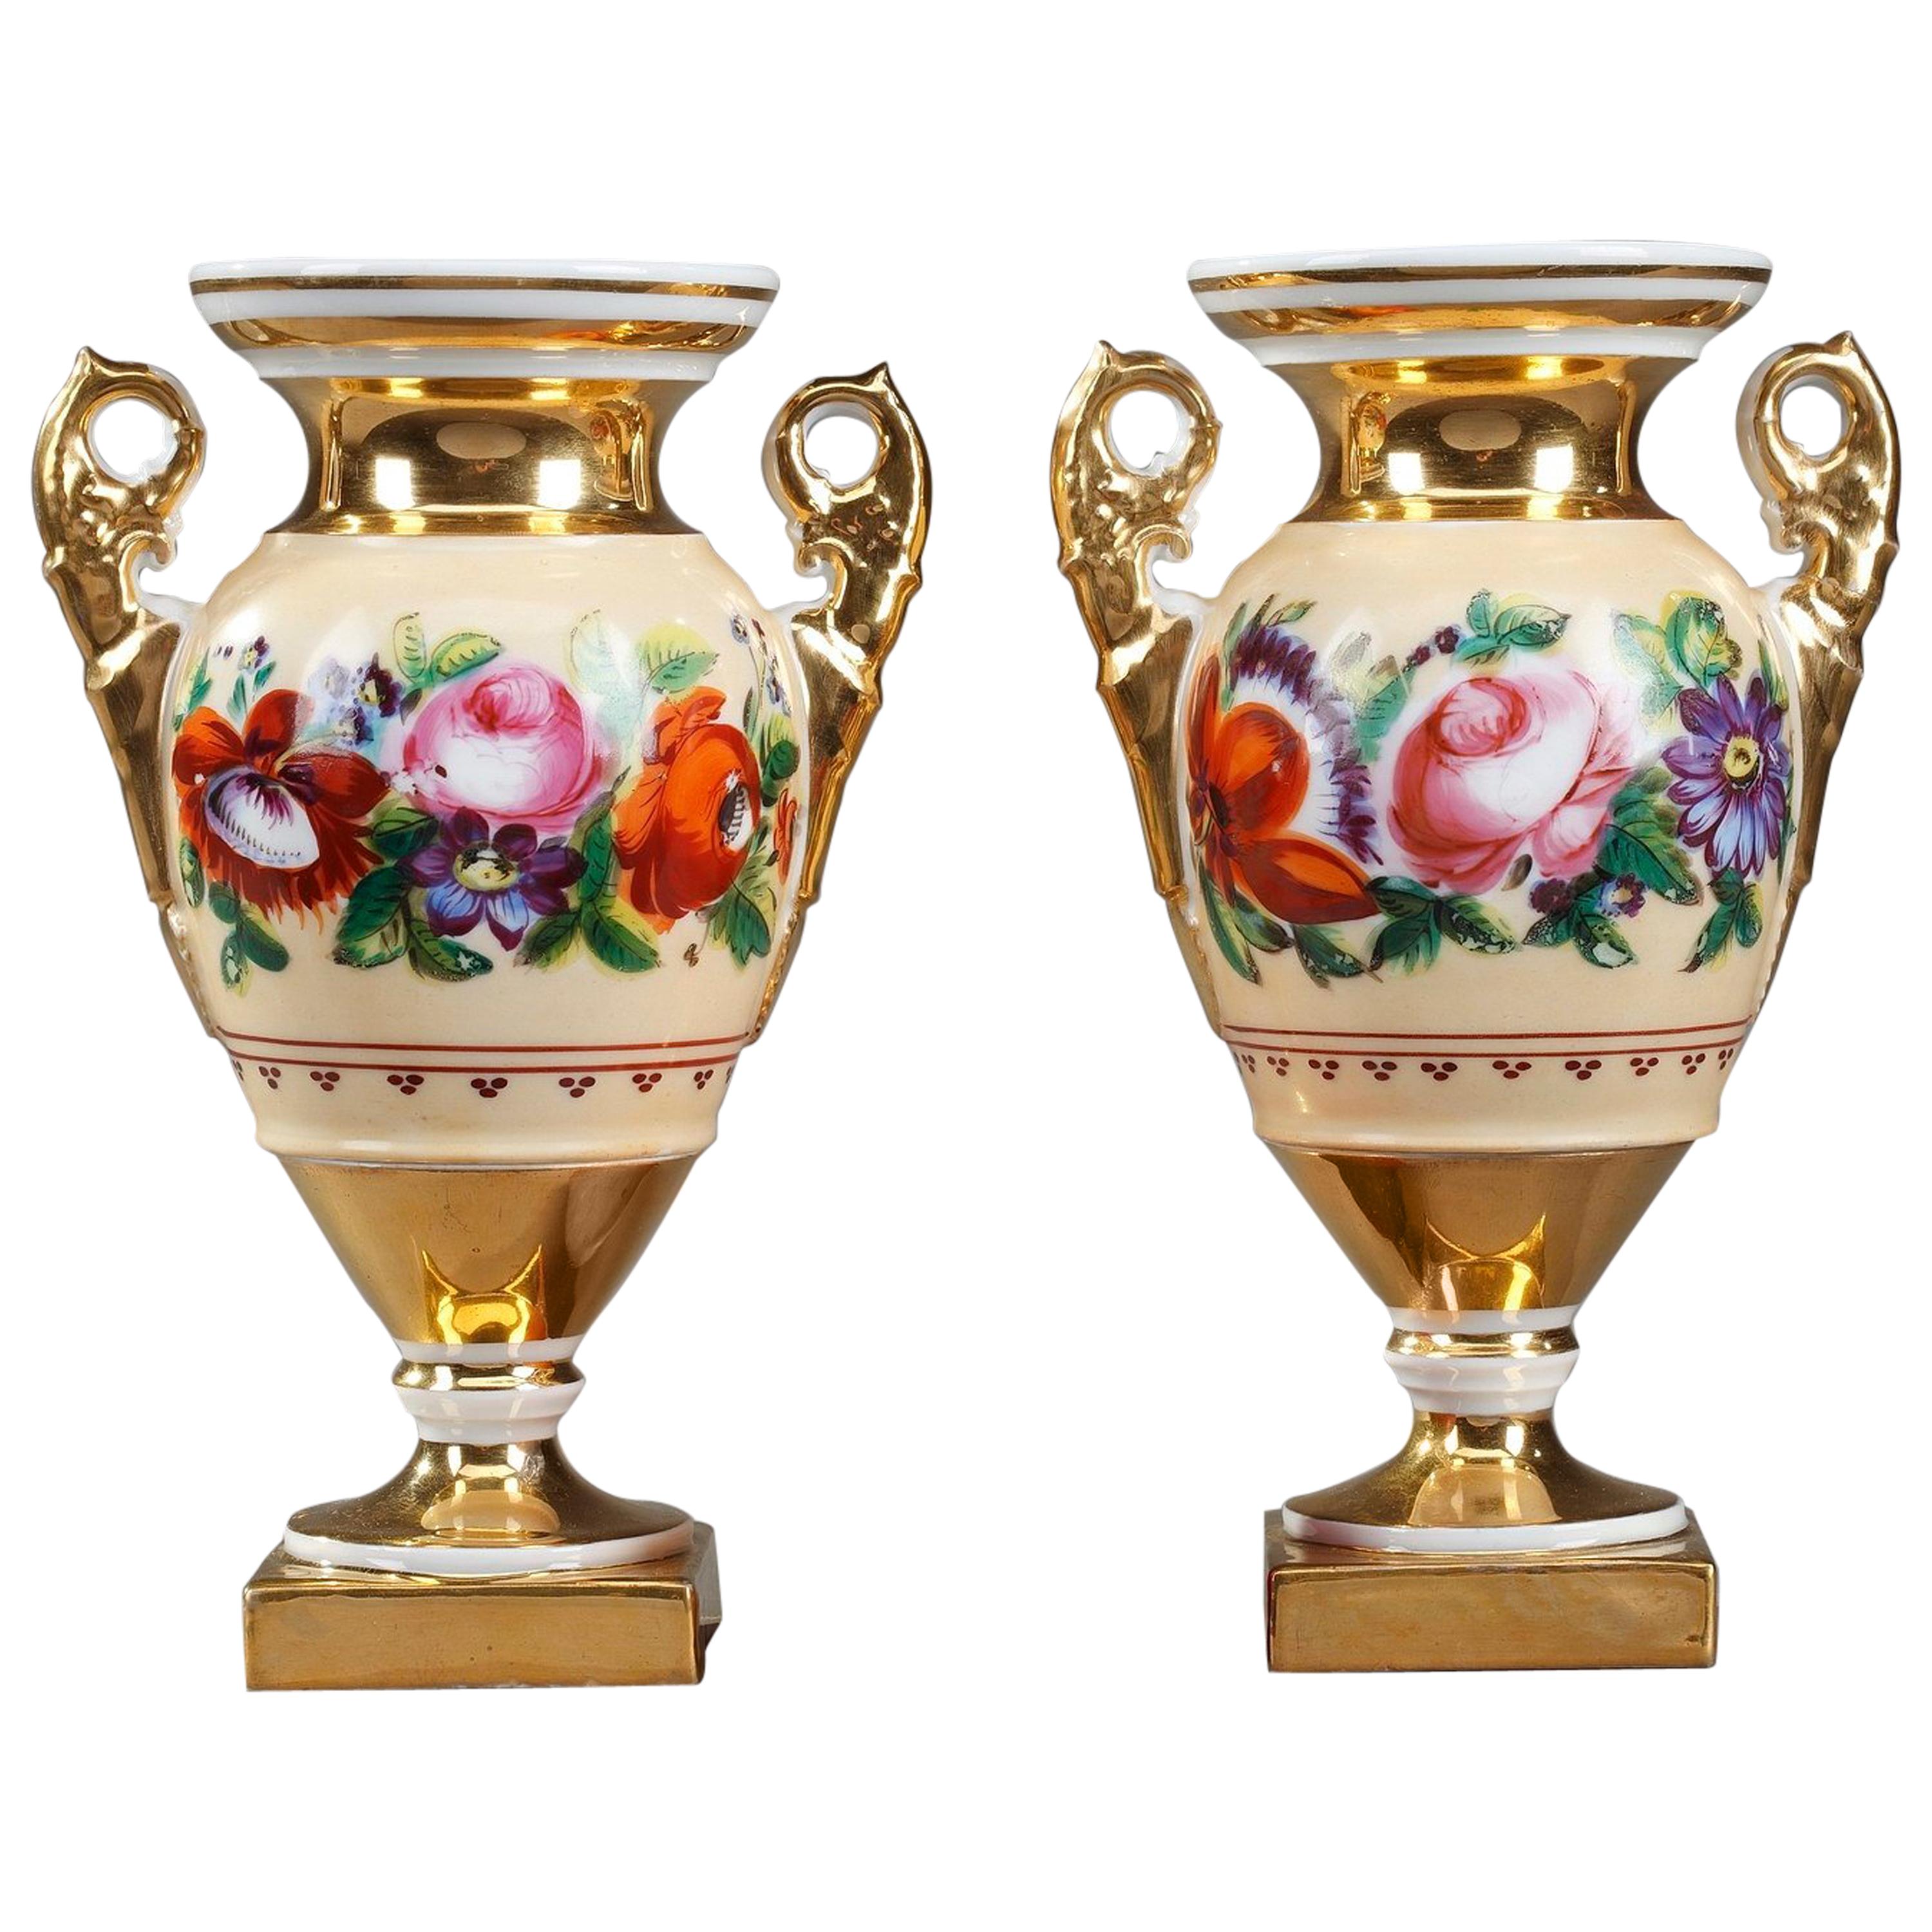 19th Century Louis-Philippe Etruscan Porcelain Vases with Floral Decoration